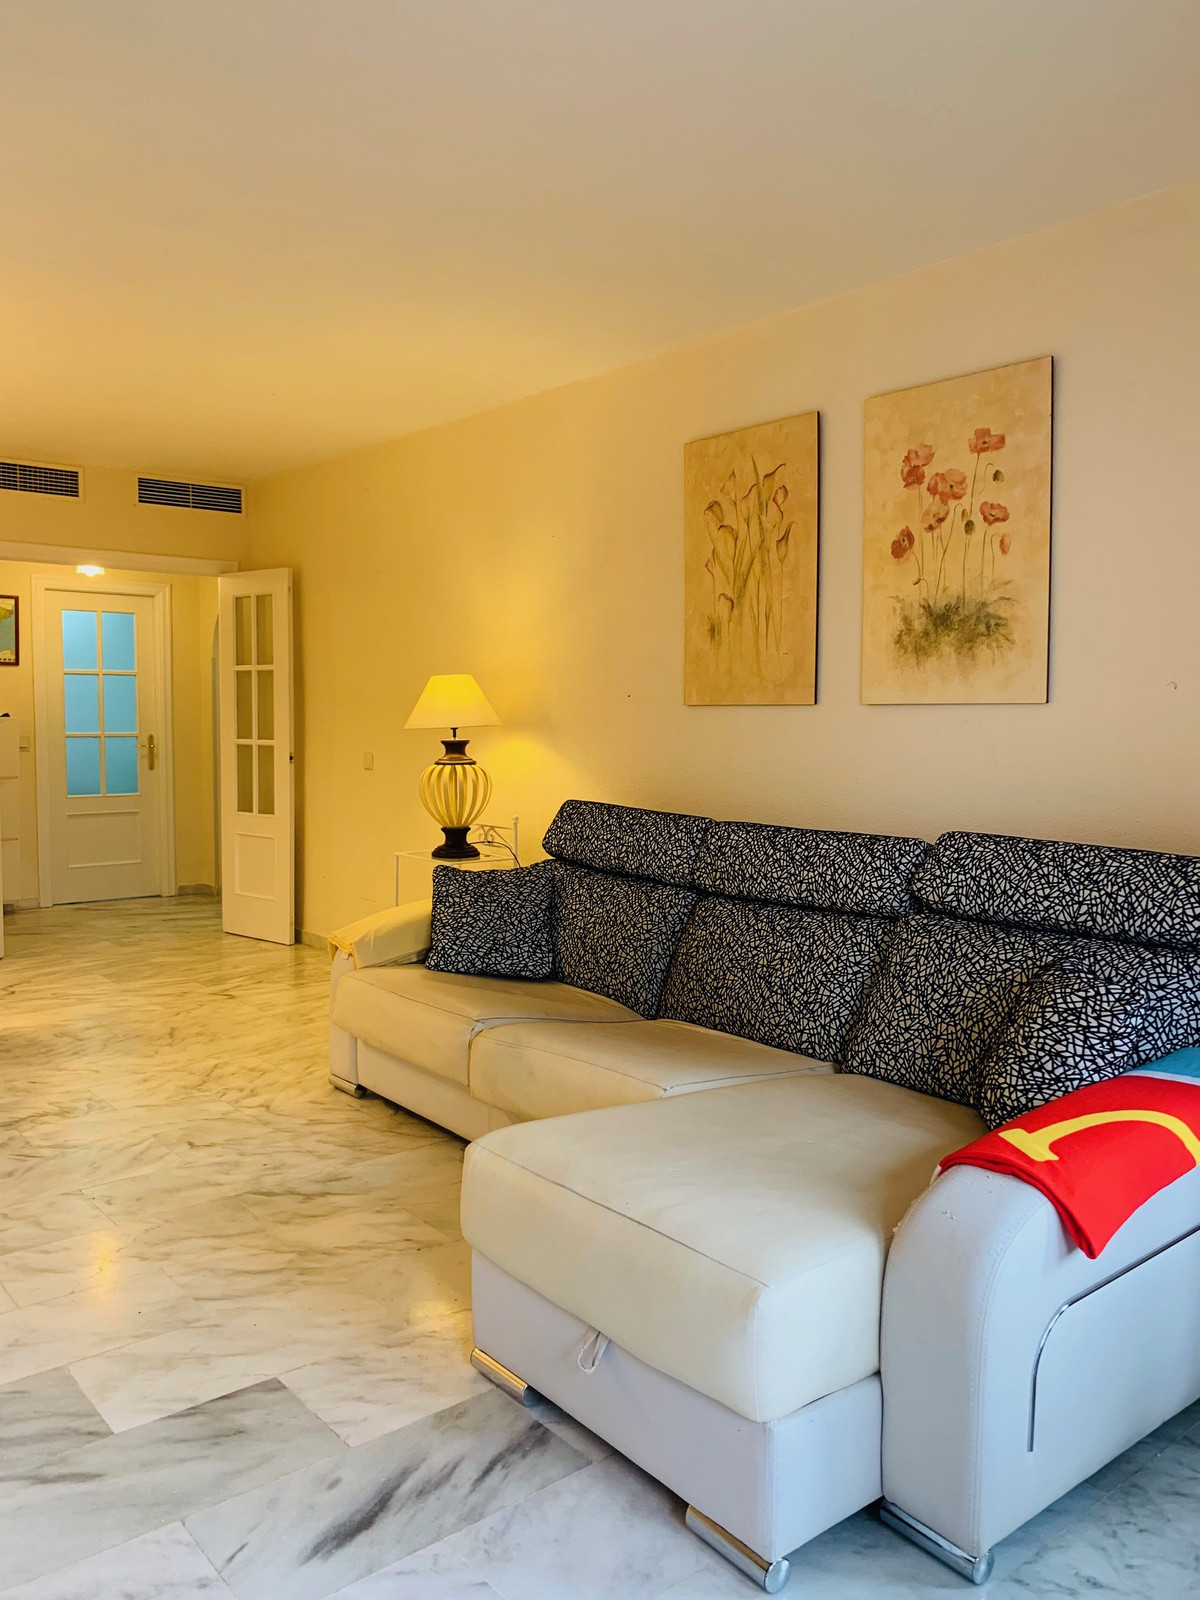 2 bedroom Apartment For Sale in Cancelada, Málaga - thumb 6